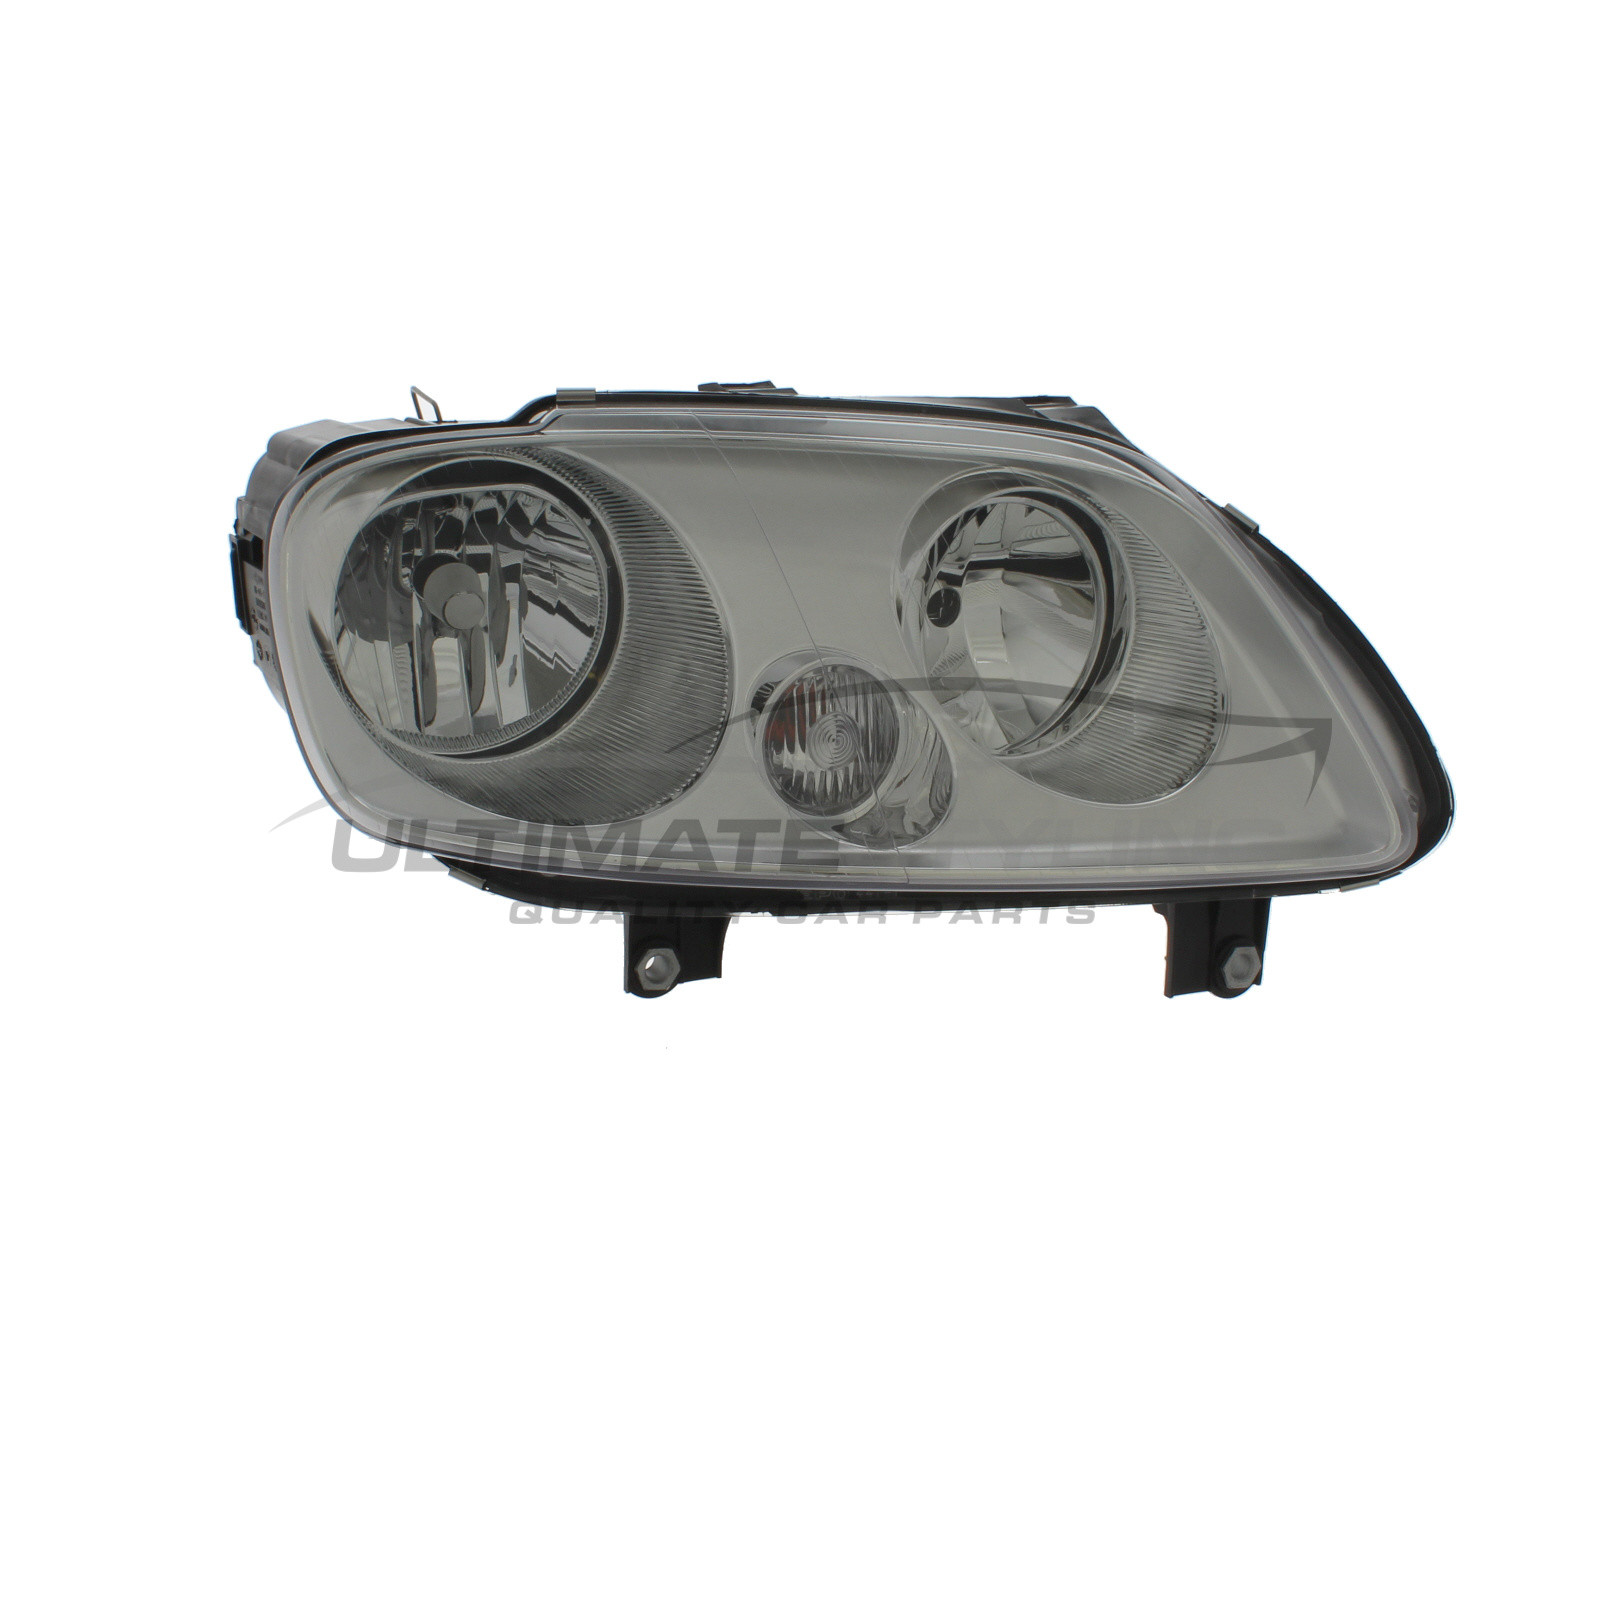 Headlight / Headlamp for VW Touran